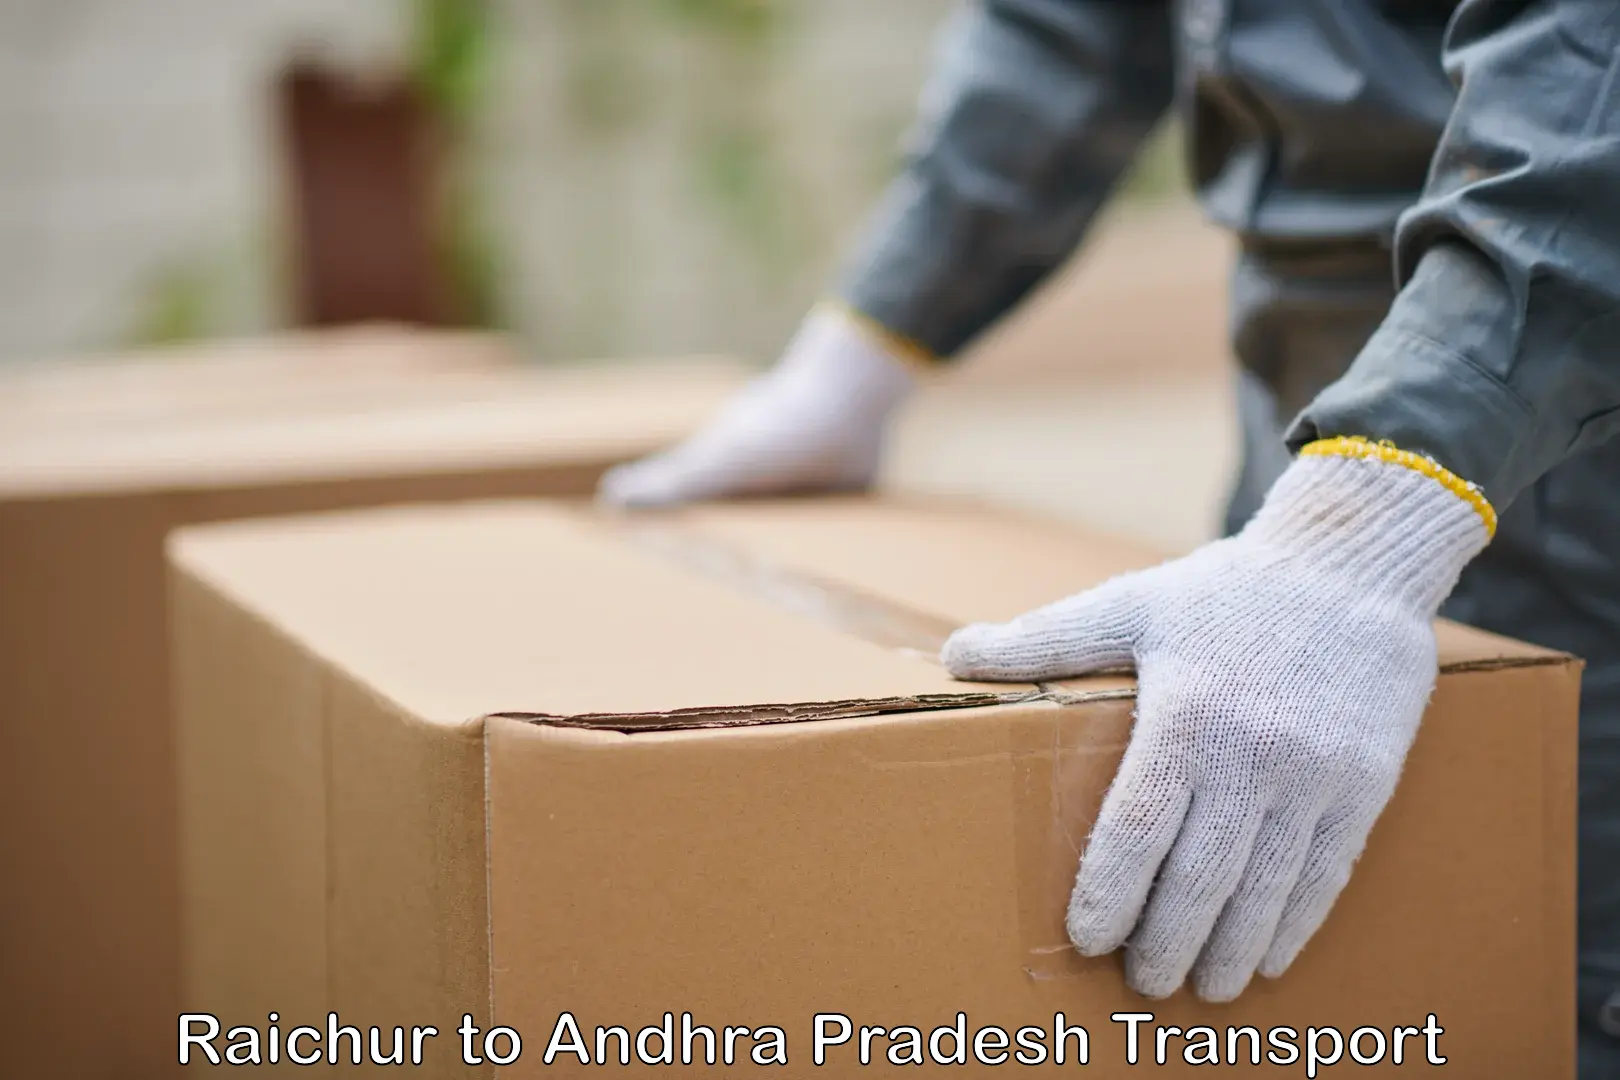 Truck transport companies in India Raichur to Andhra Pradesh